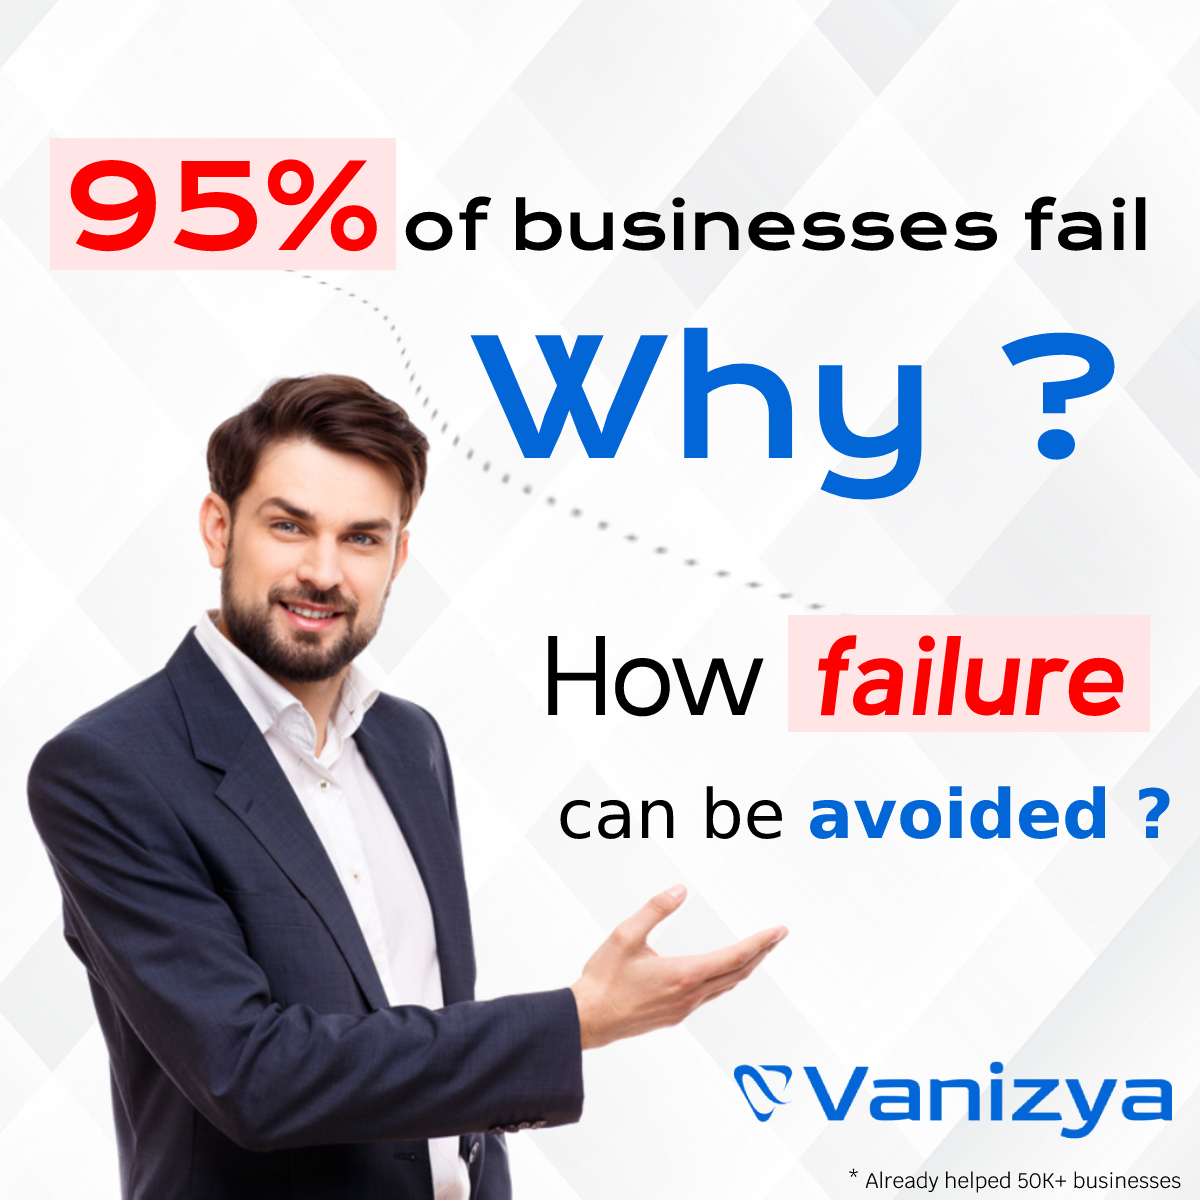 Business management software Vanizya